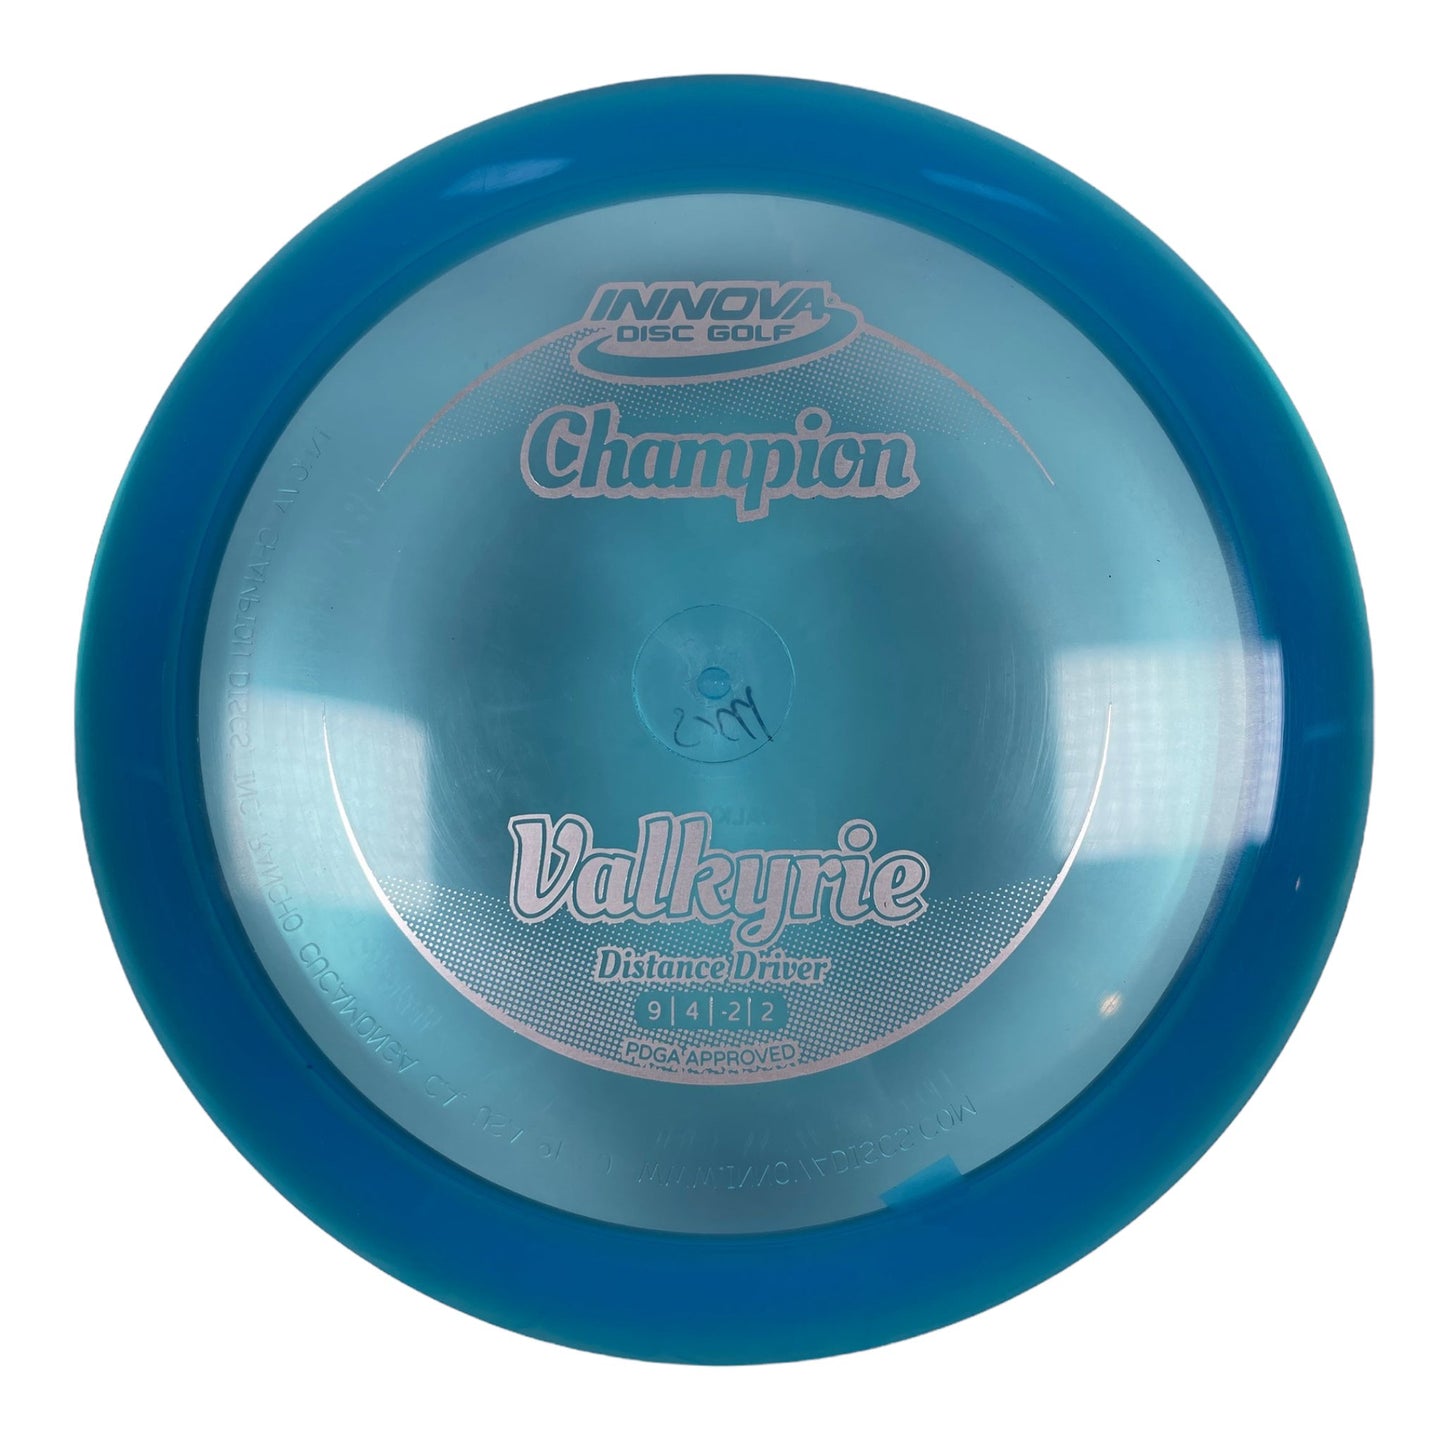 Innova Champion Discs Valkyrie | Champion | Blue/Silver 175g Disc Golf